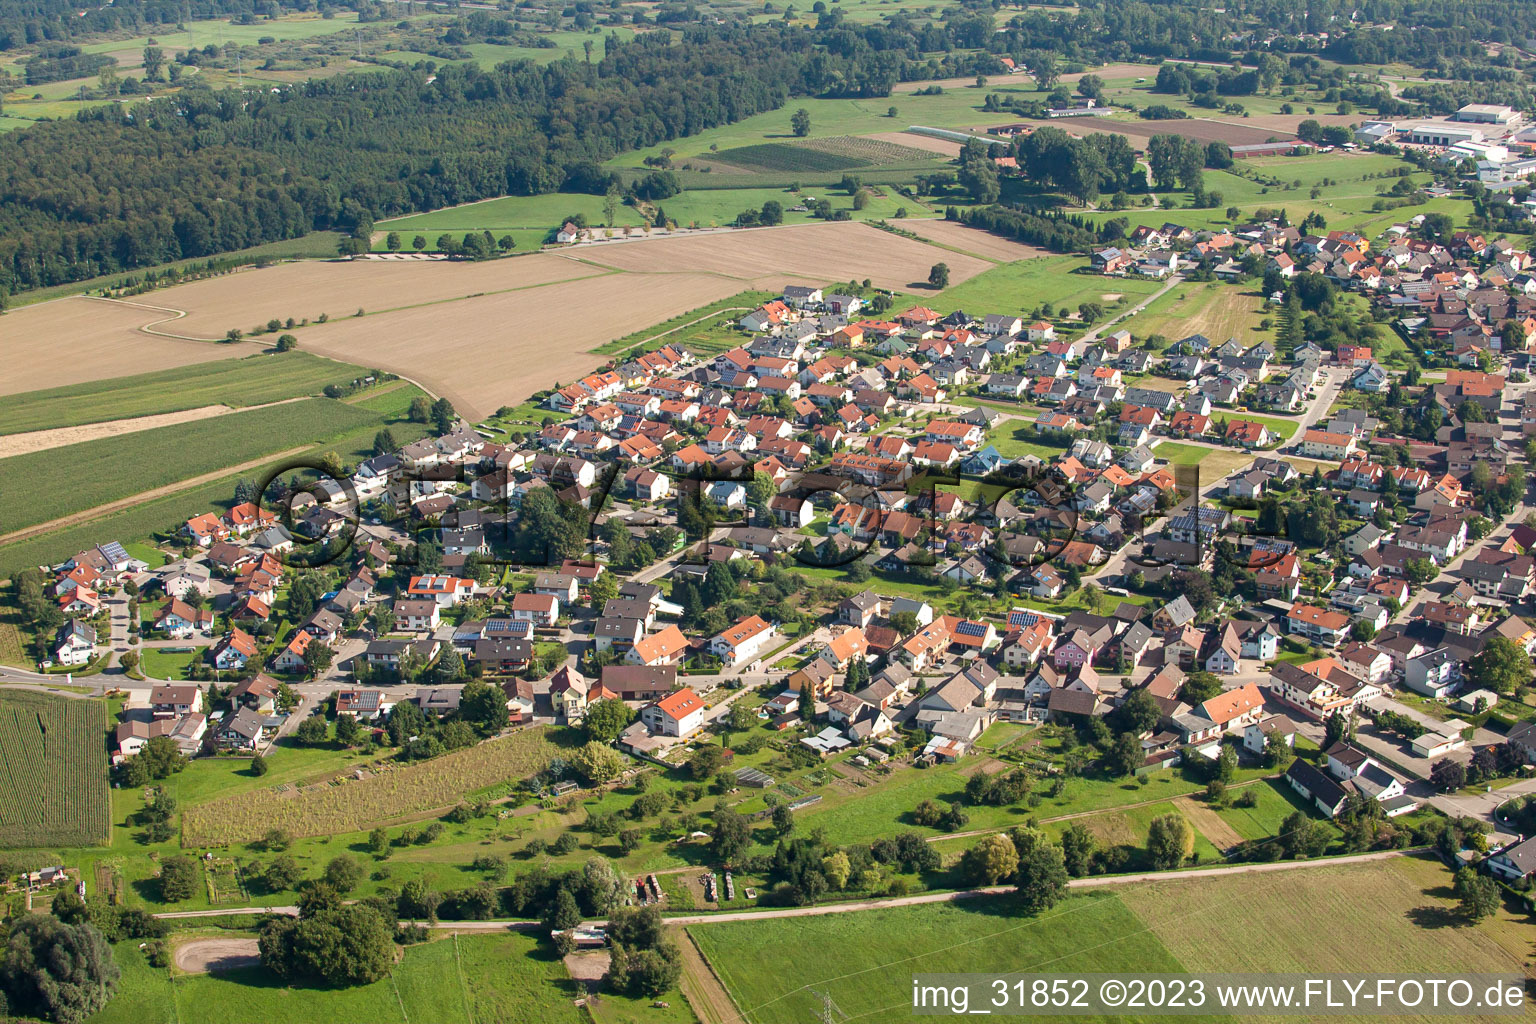 Vue aérienne de Quartier Kartung in Sinzheim dans le département Bade-Wurtemberg, Allemagne